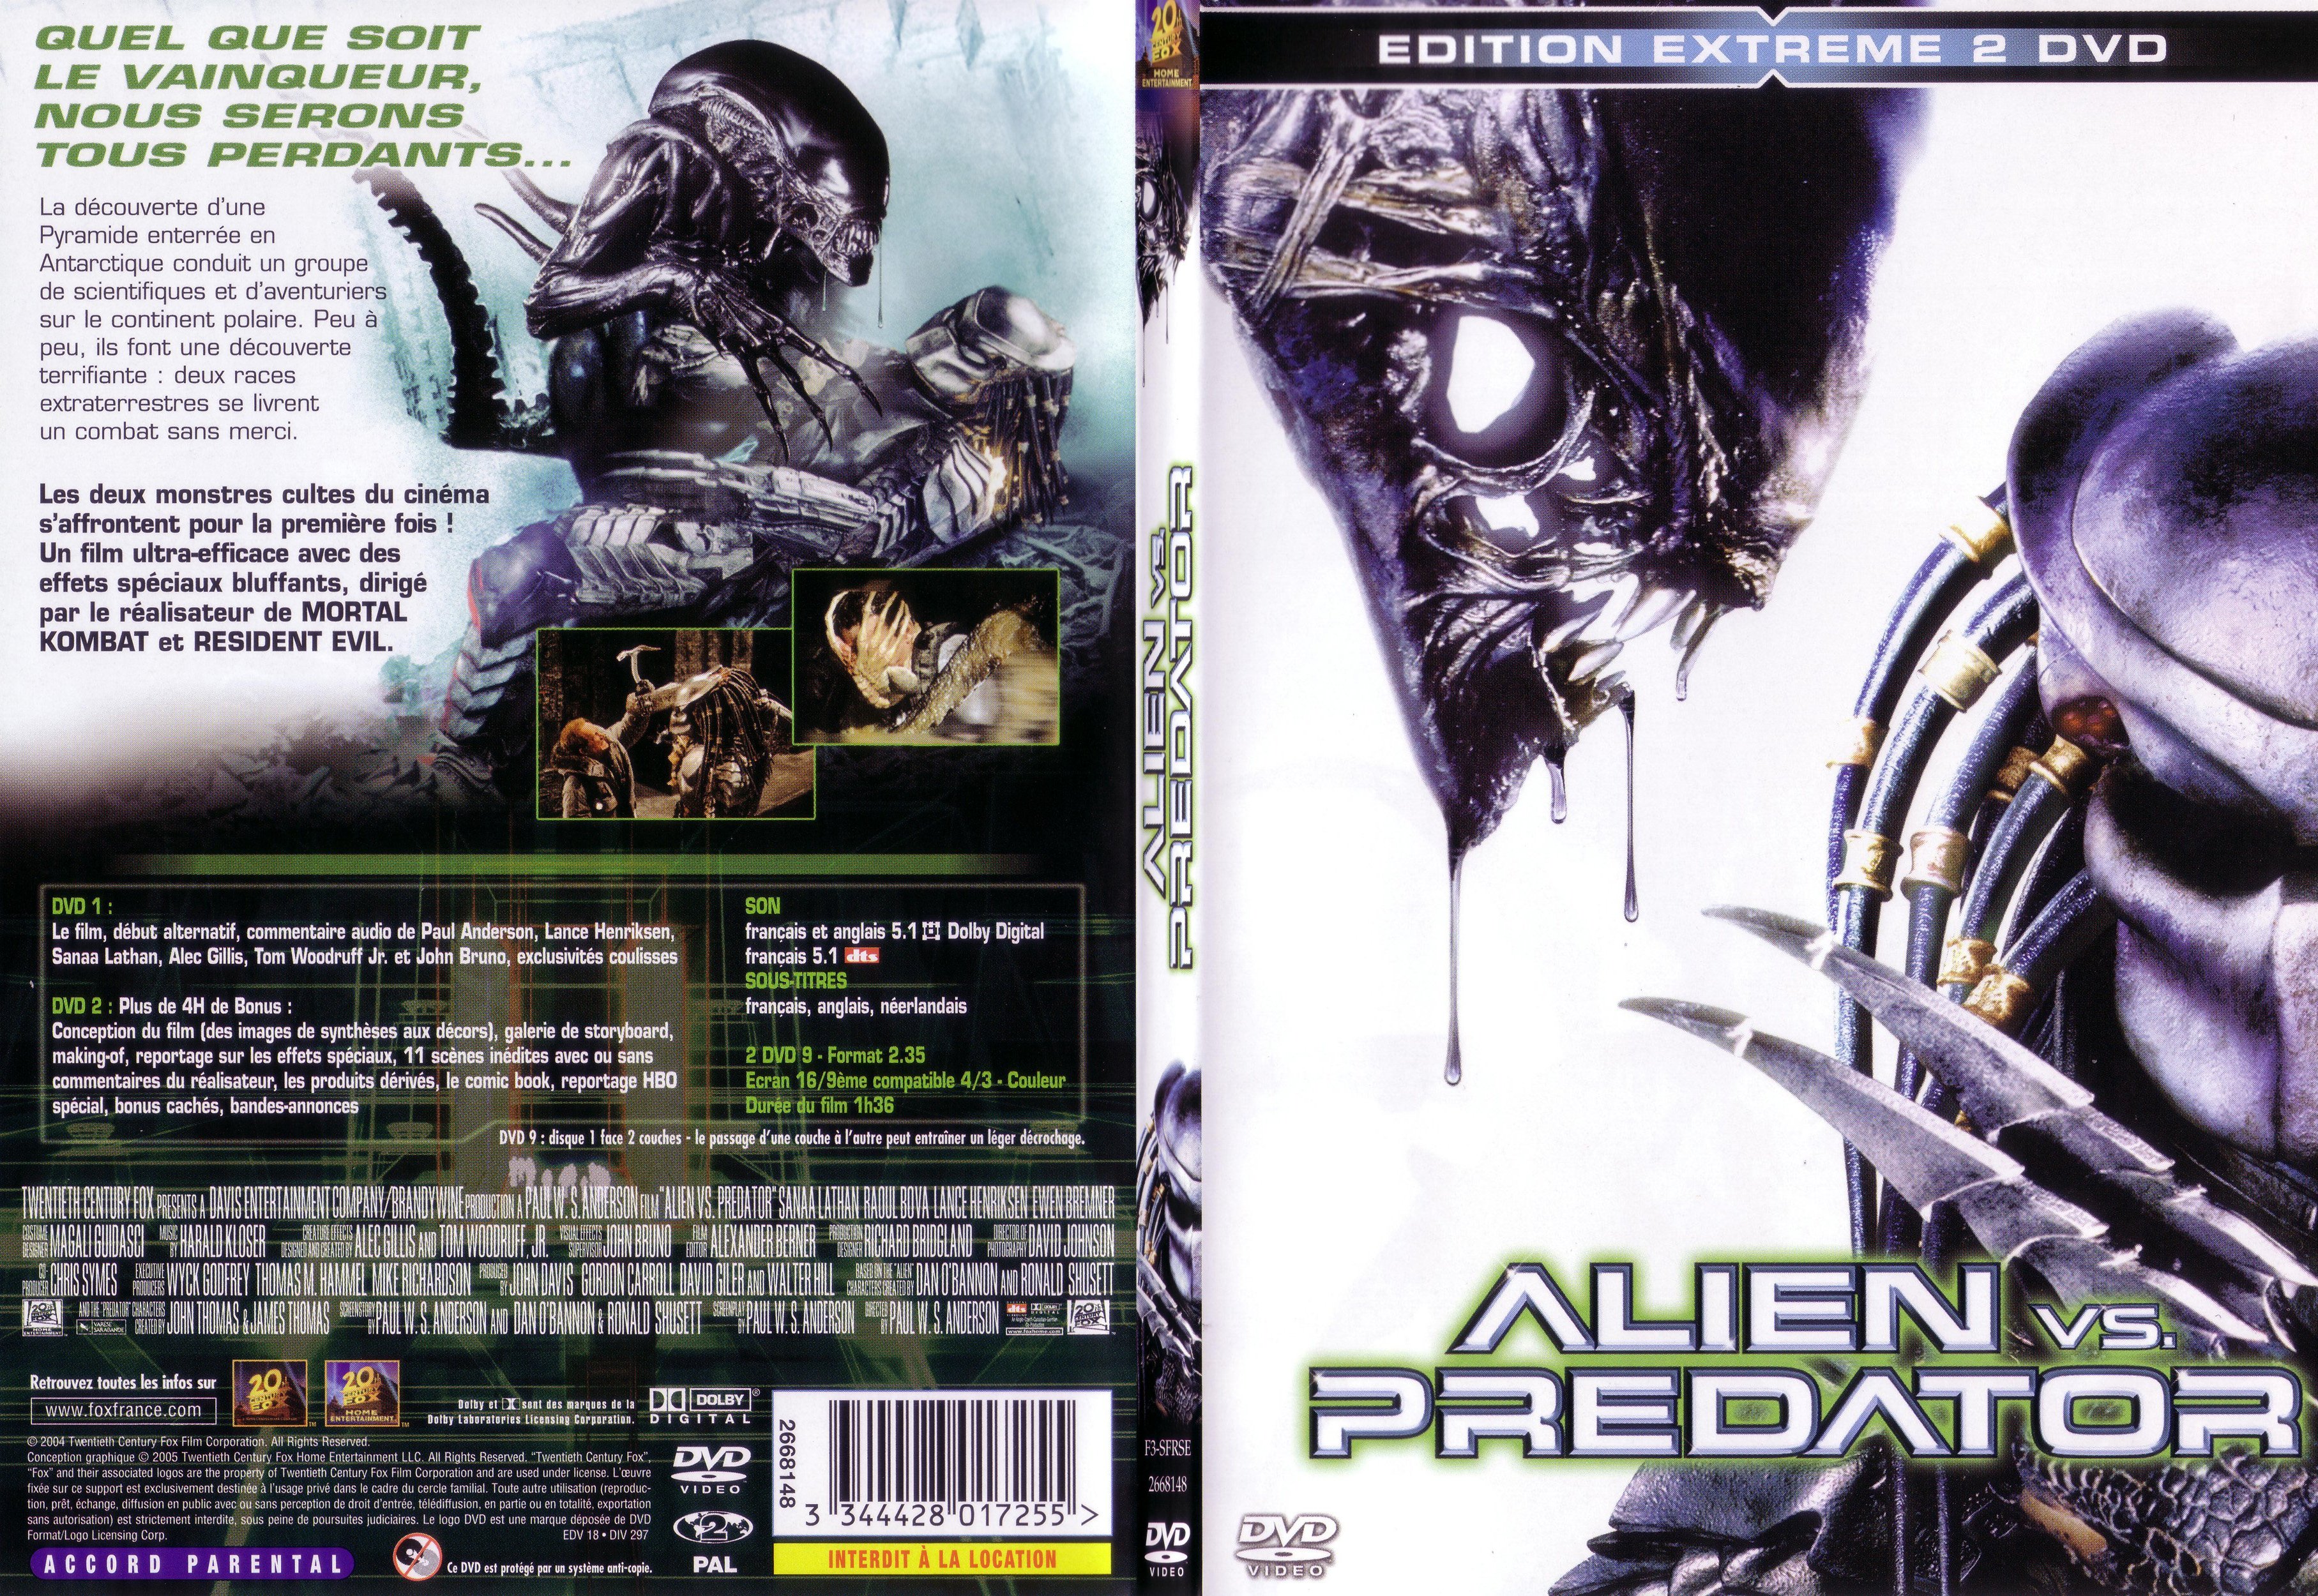 Jaquette DVD Alien vs Predator - SLIM v2